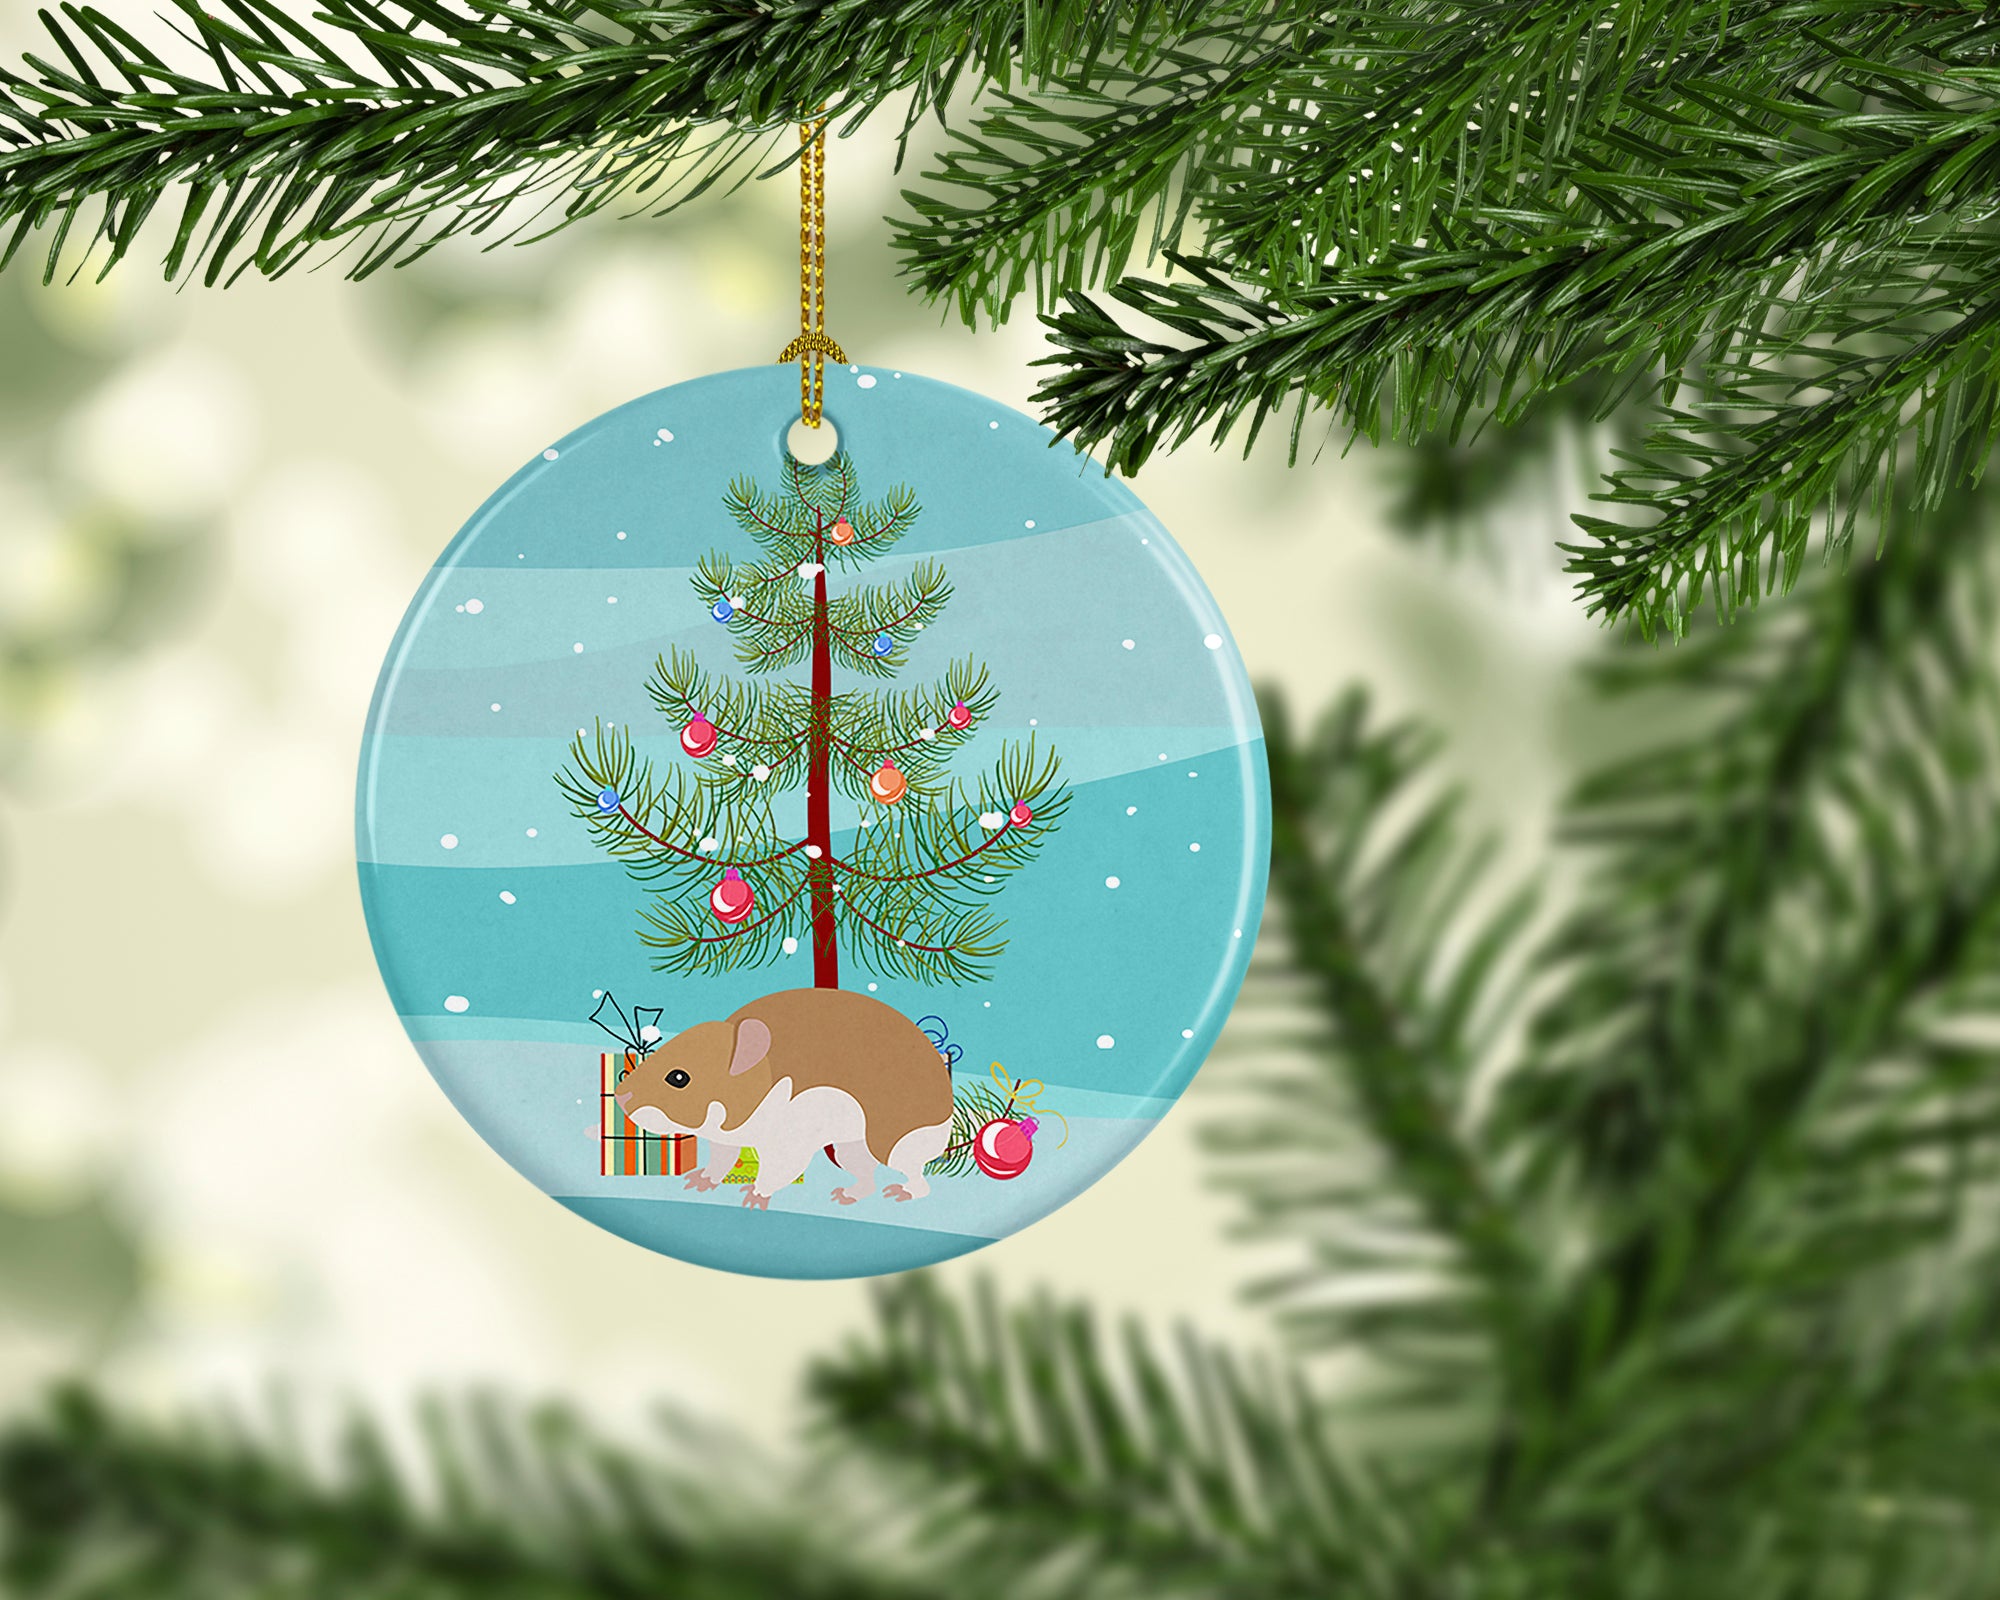 Buy this Turkish Hamster Merry Christmas Ceramic Ornament